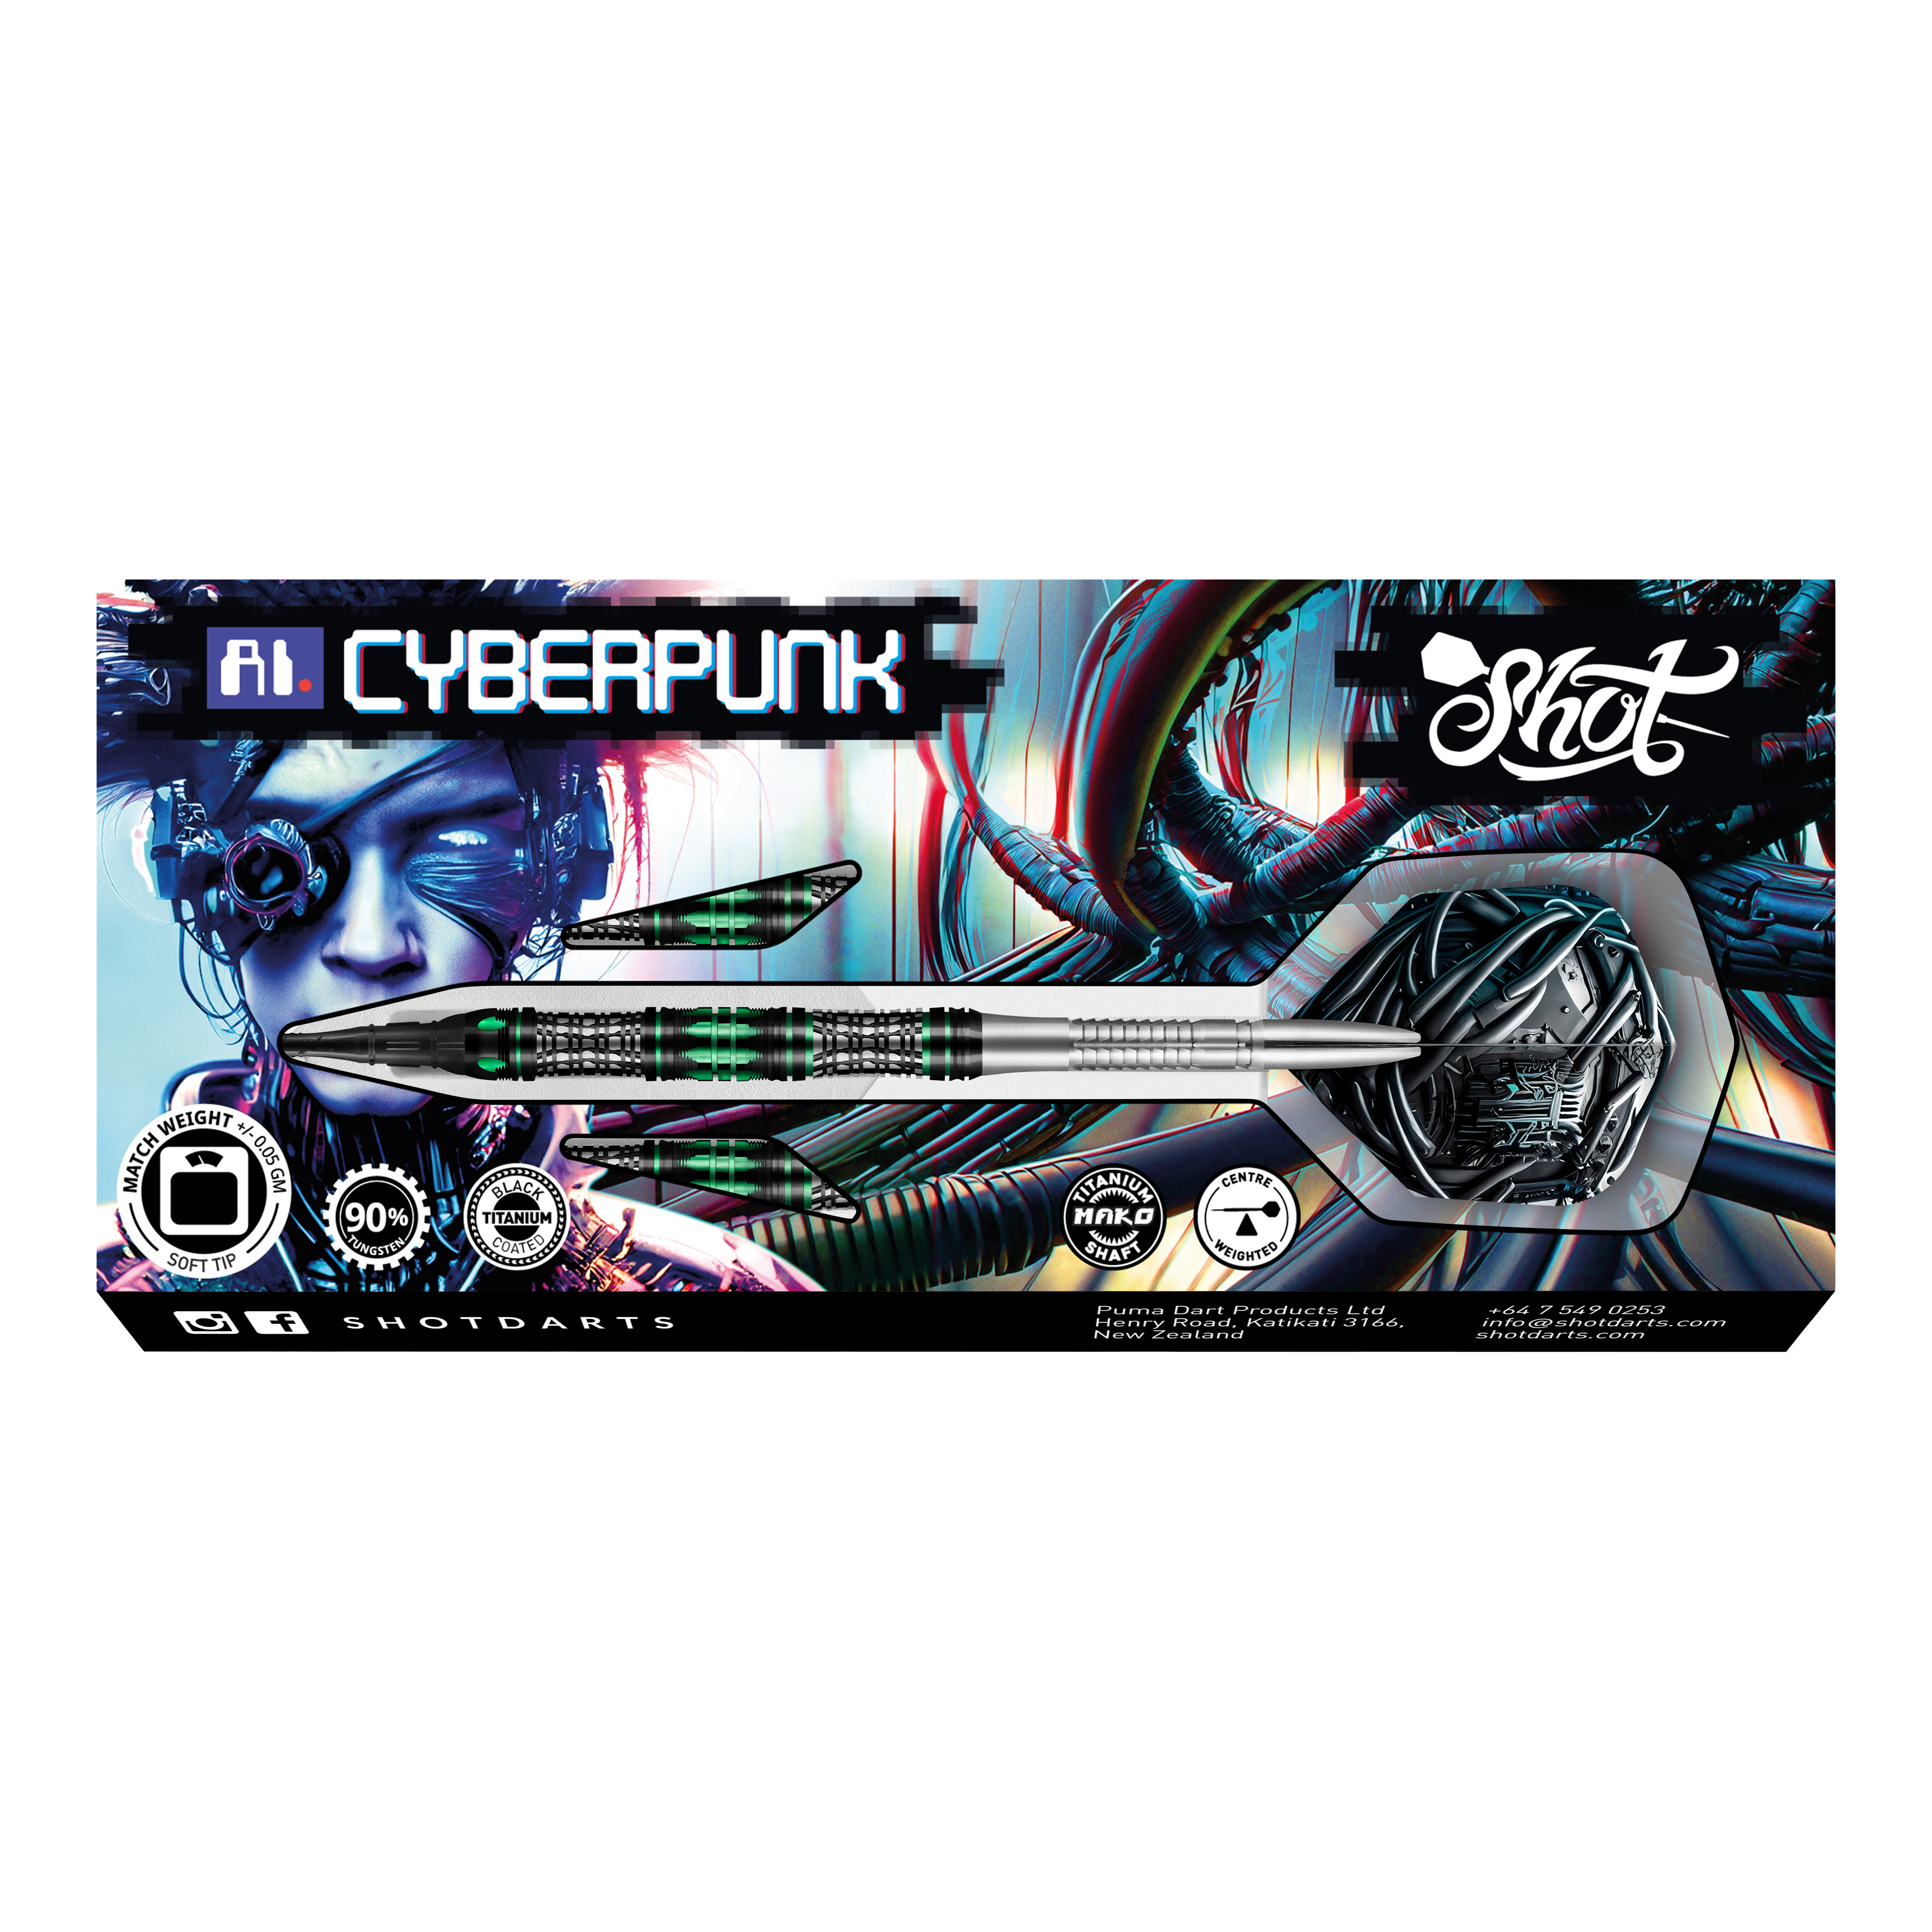 Shot AI Cyberpunk Softdarts - 20g